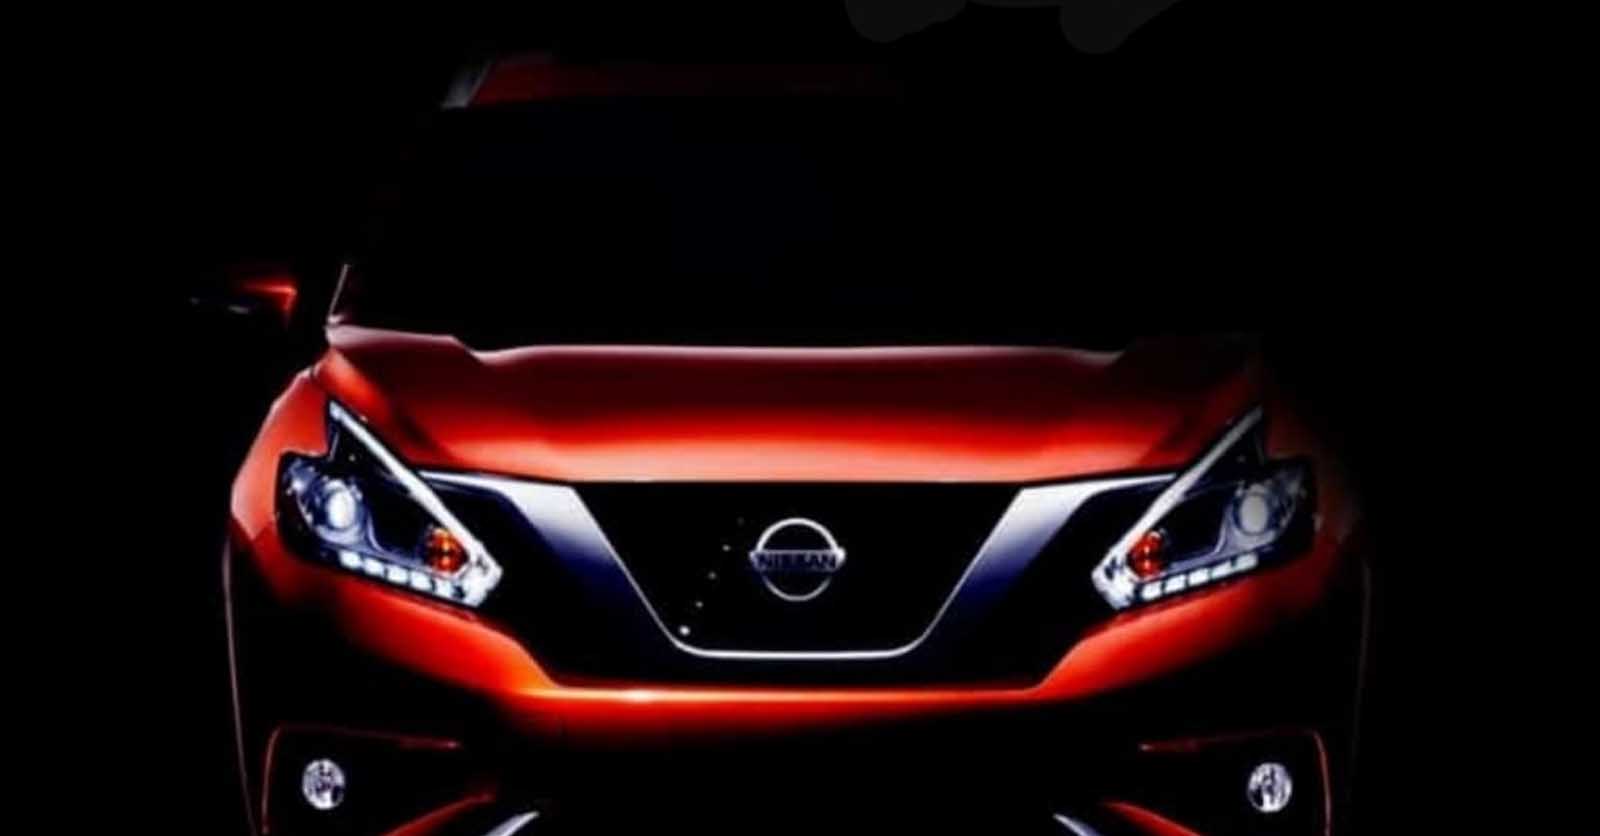 Berita, Nissan Livina Hoax: Inikah Nissan Livina Baru Yang Menjemput Konsumen di Awal 2019?